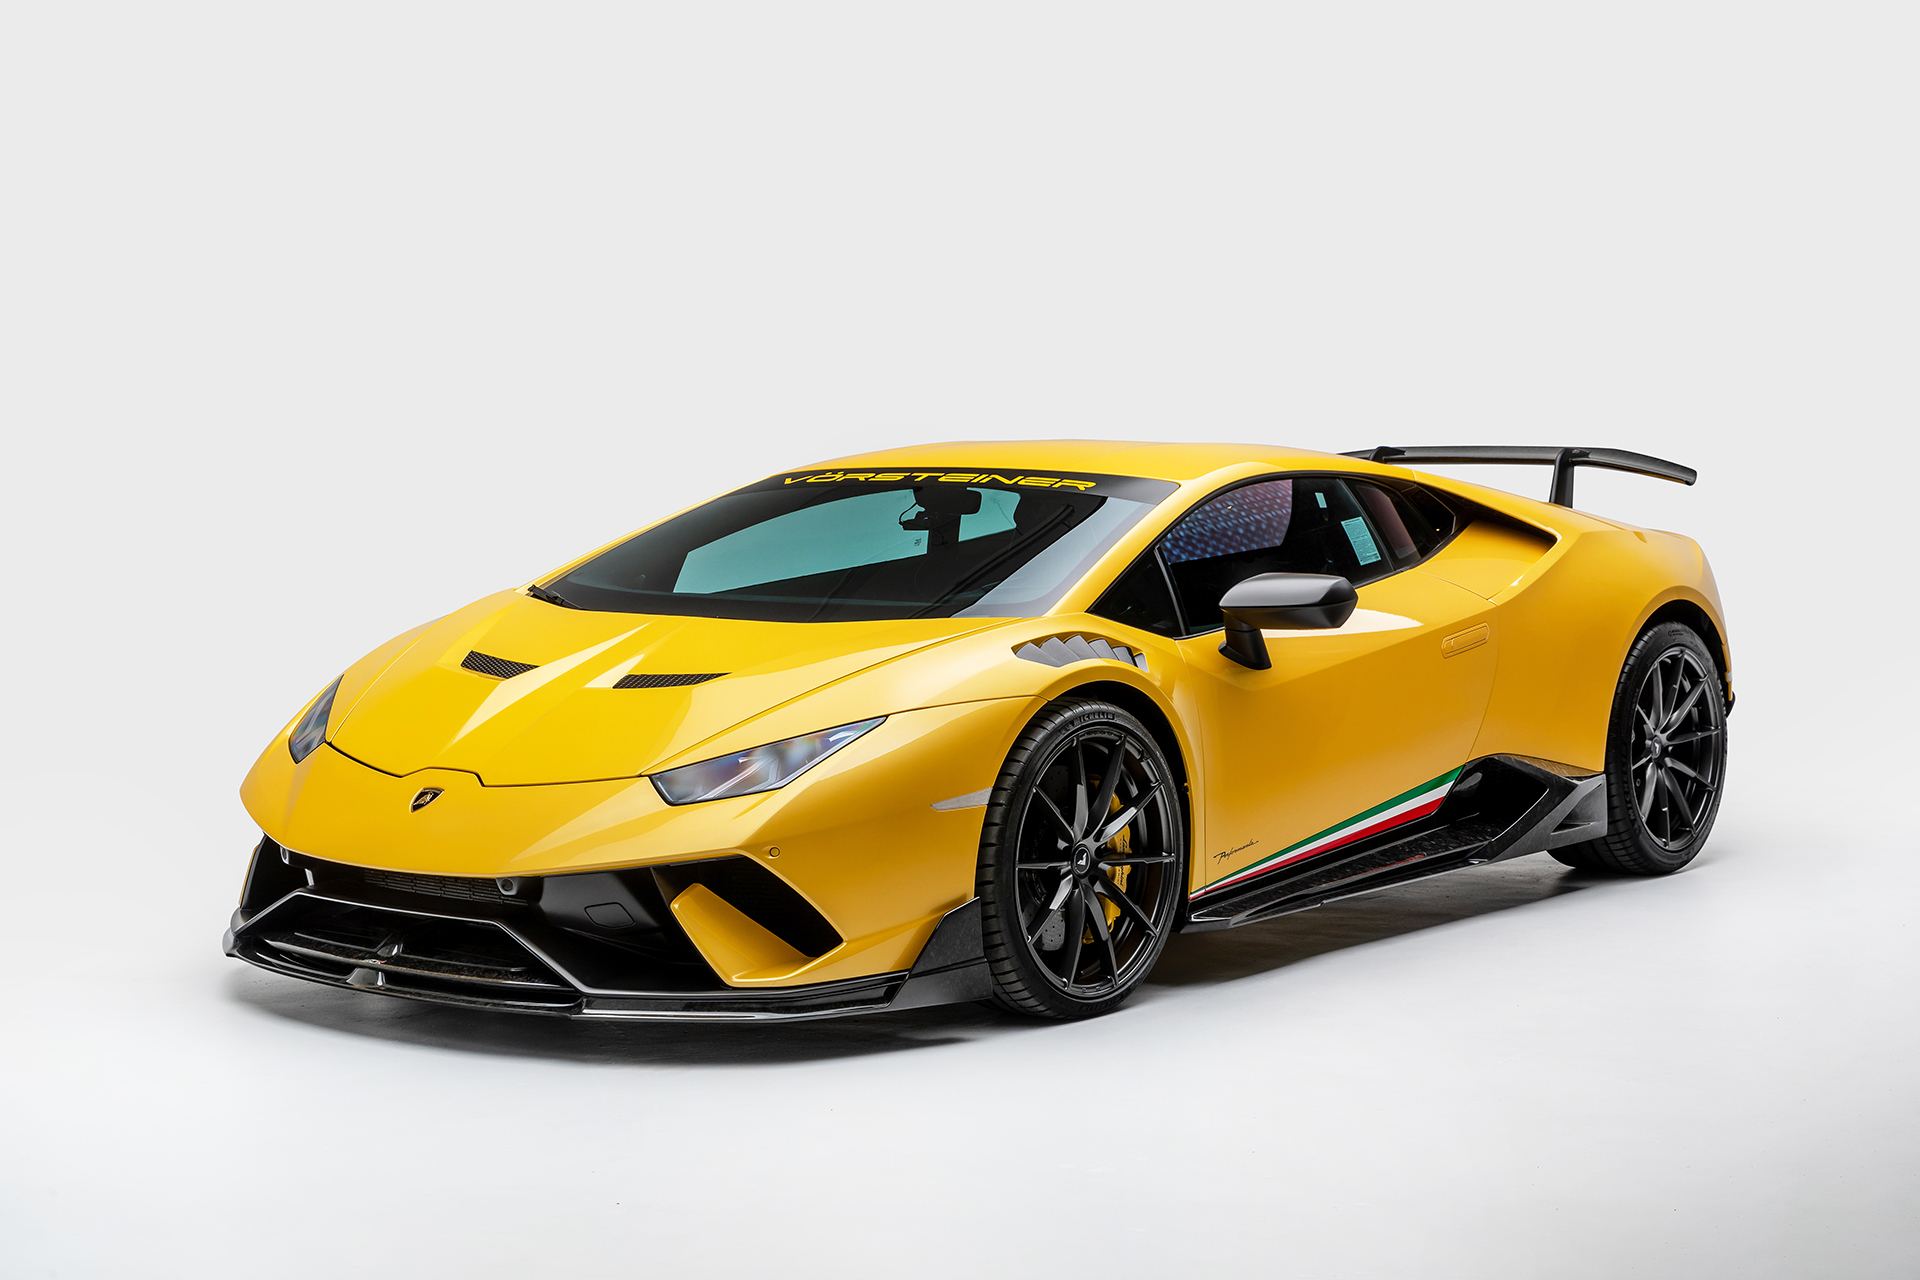 Vorsteiner Nero body kit for Lamborghini Huracan Vincenzo new style